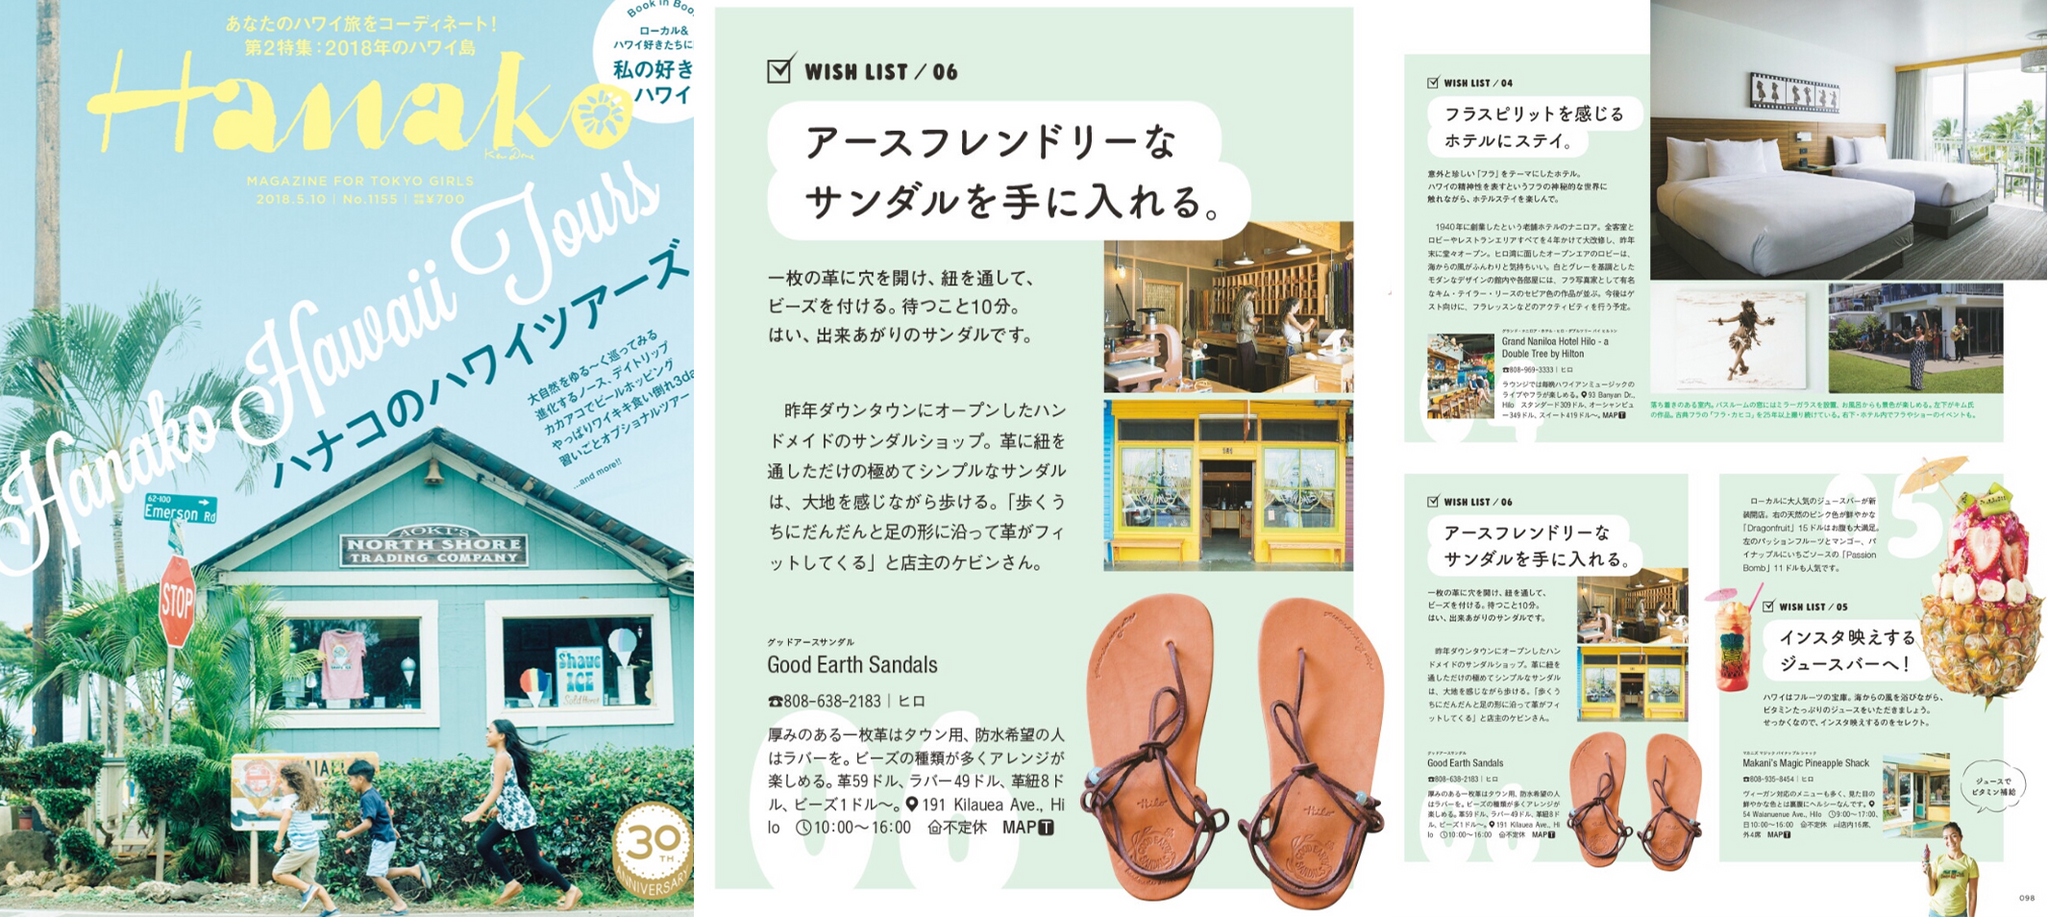 Good Earth Sandals Featured In Hanako Magazine